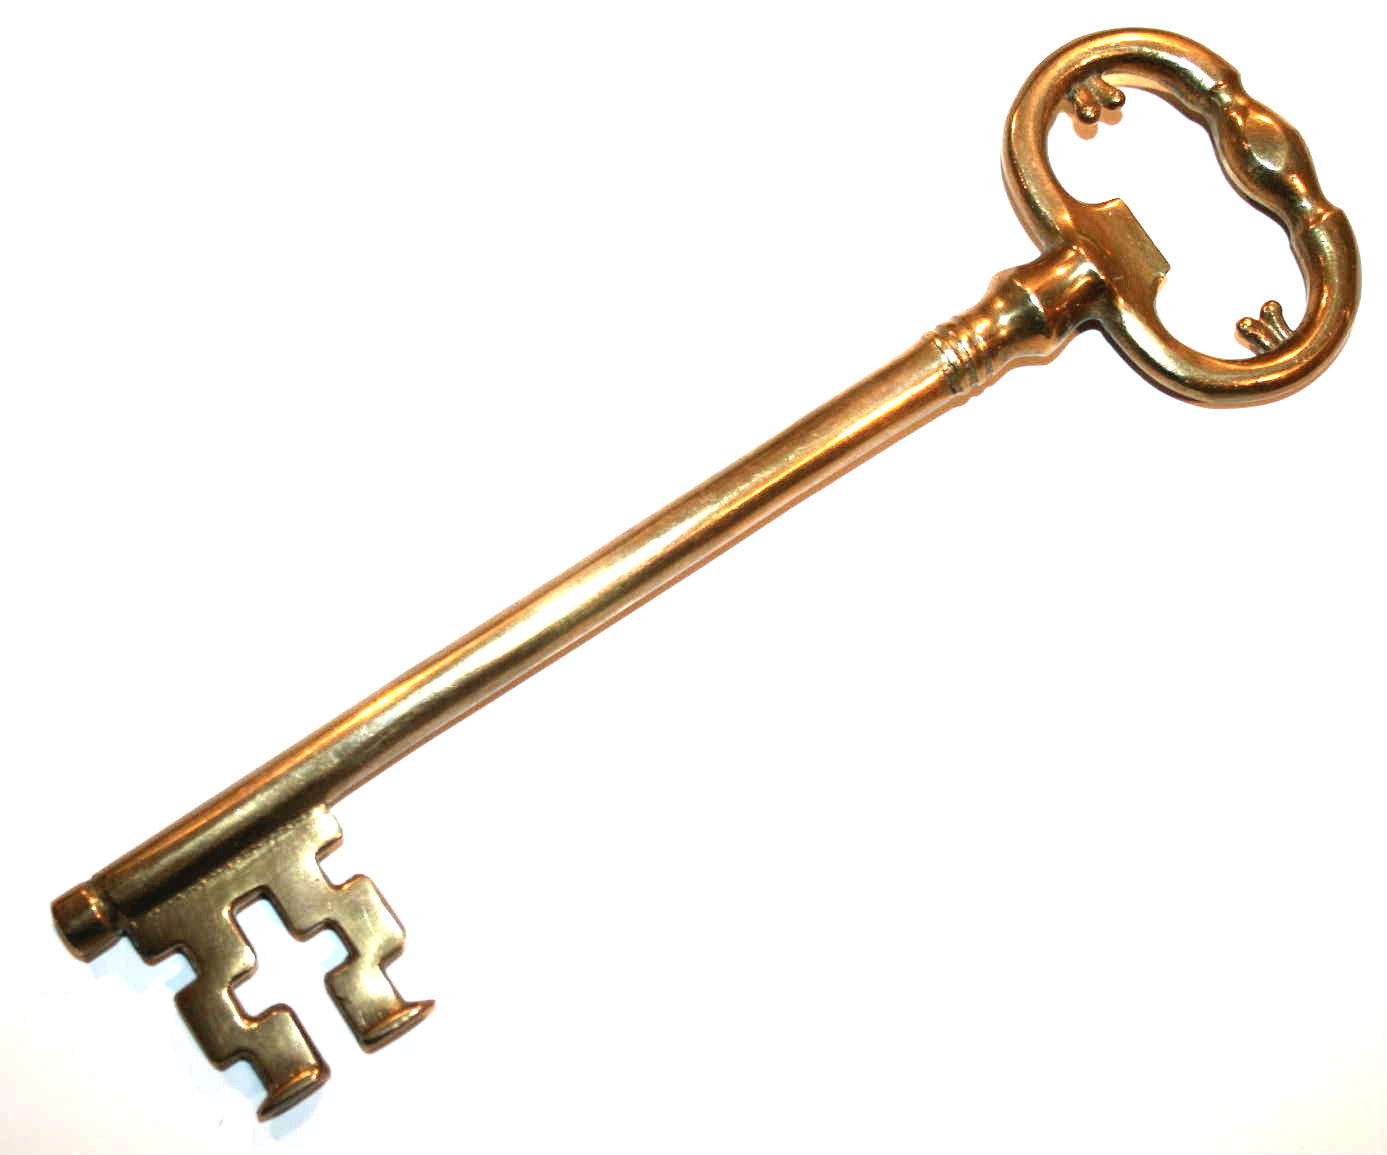 Keys picture. Форт Боярд ключи. Ключ Боярд замок. Старинный ключ Форт Боярд. Ключ от замка.